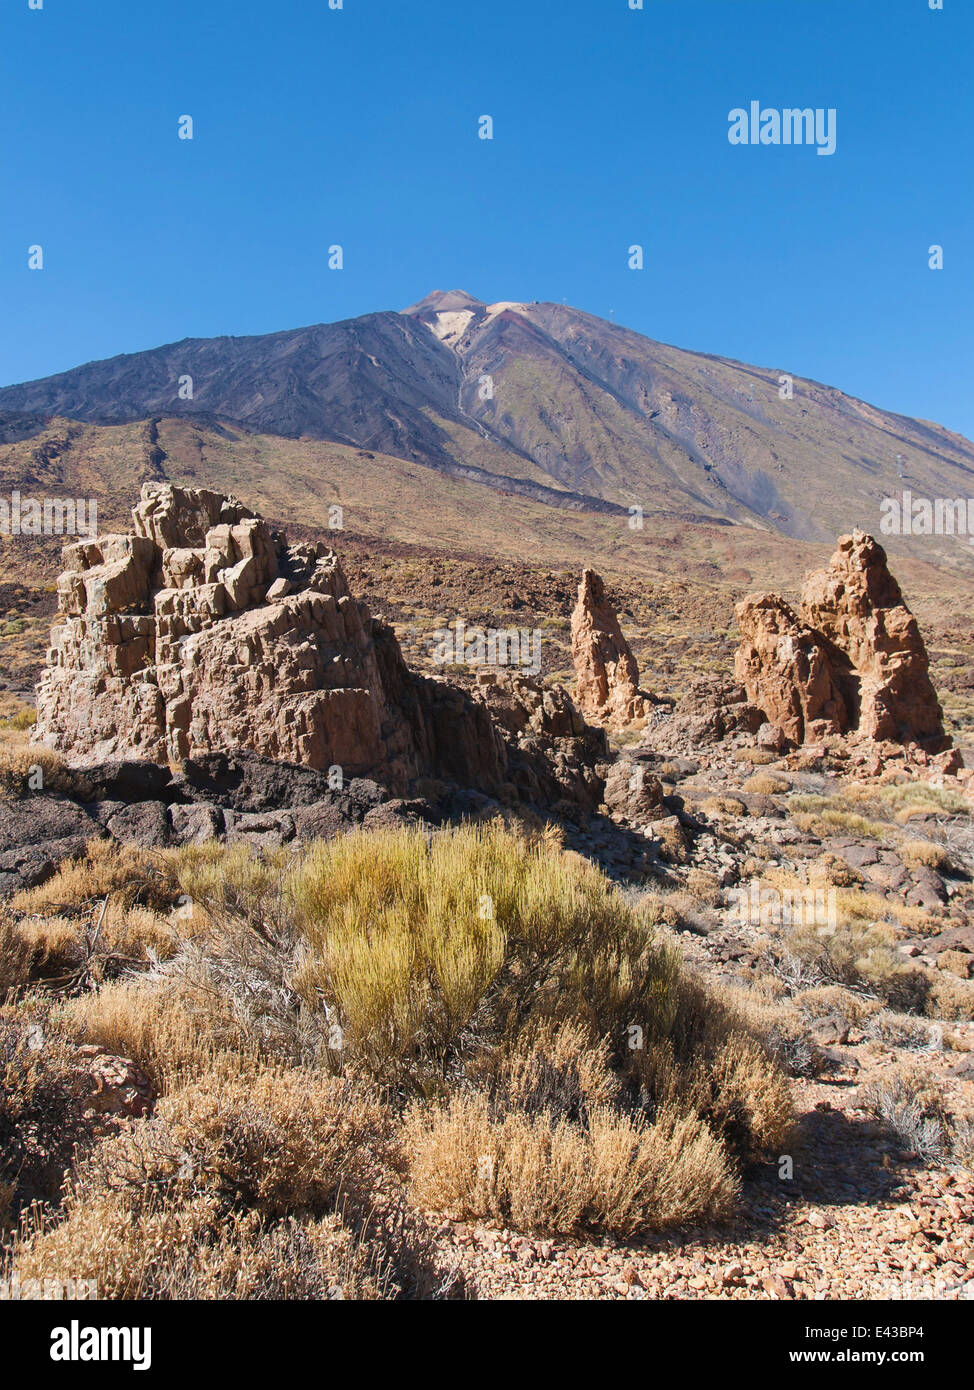 Mount Teide in Tenerife, Canary Islands. Stock Photo